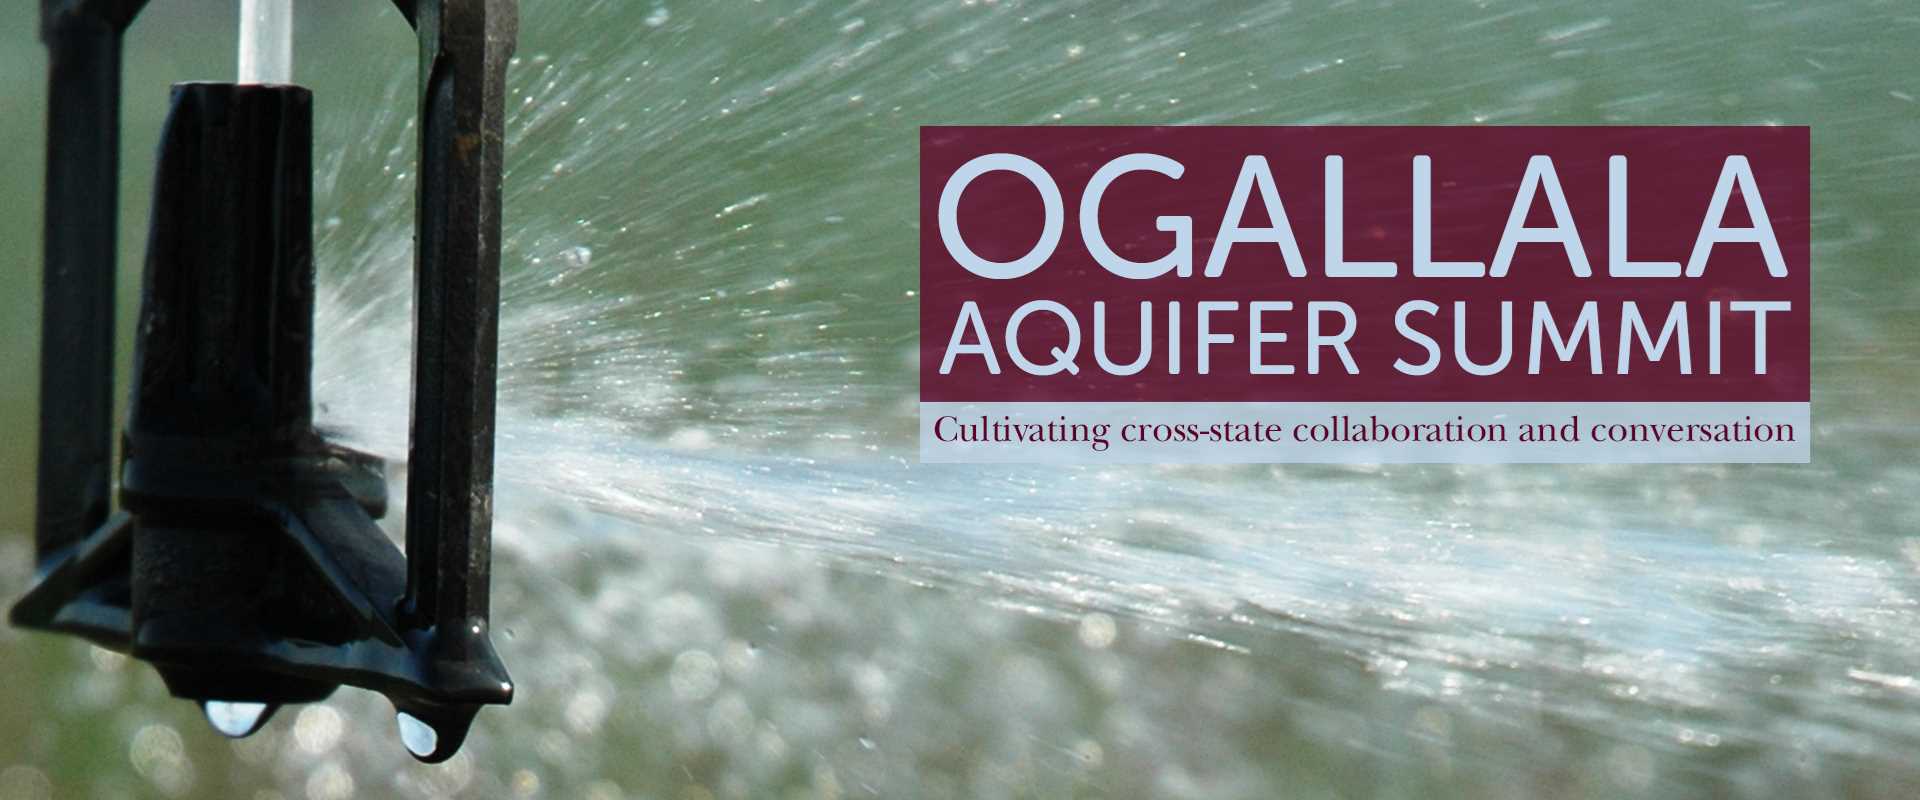 Ogallala Aquifer Summit